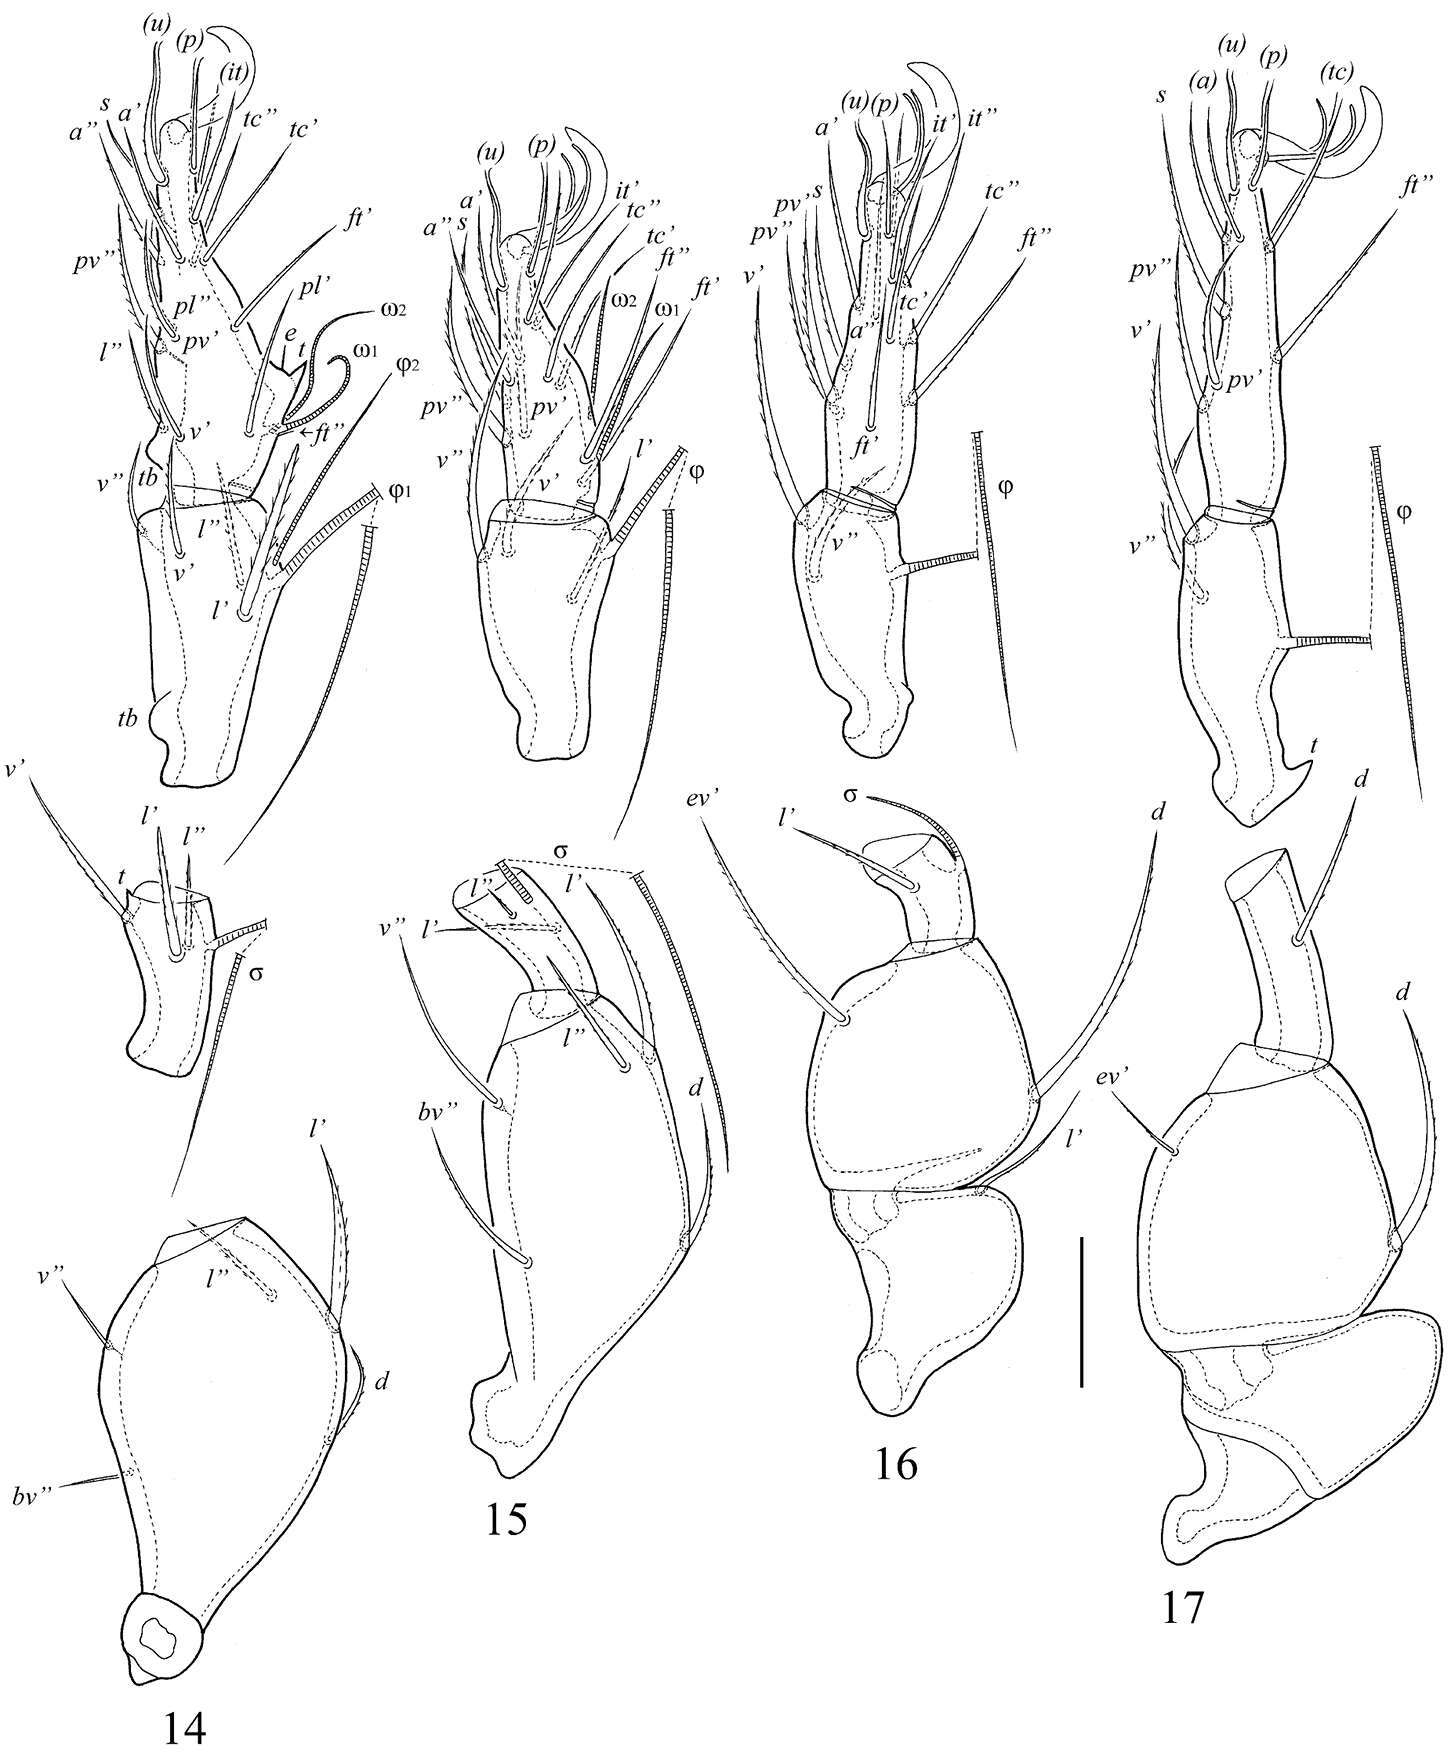 Image of Truncozetes ecuadoriensis Ermilov, Sandmann, Marian & Maraun 2013